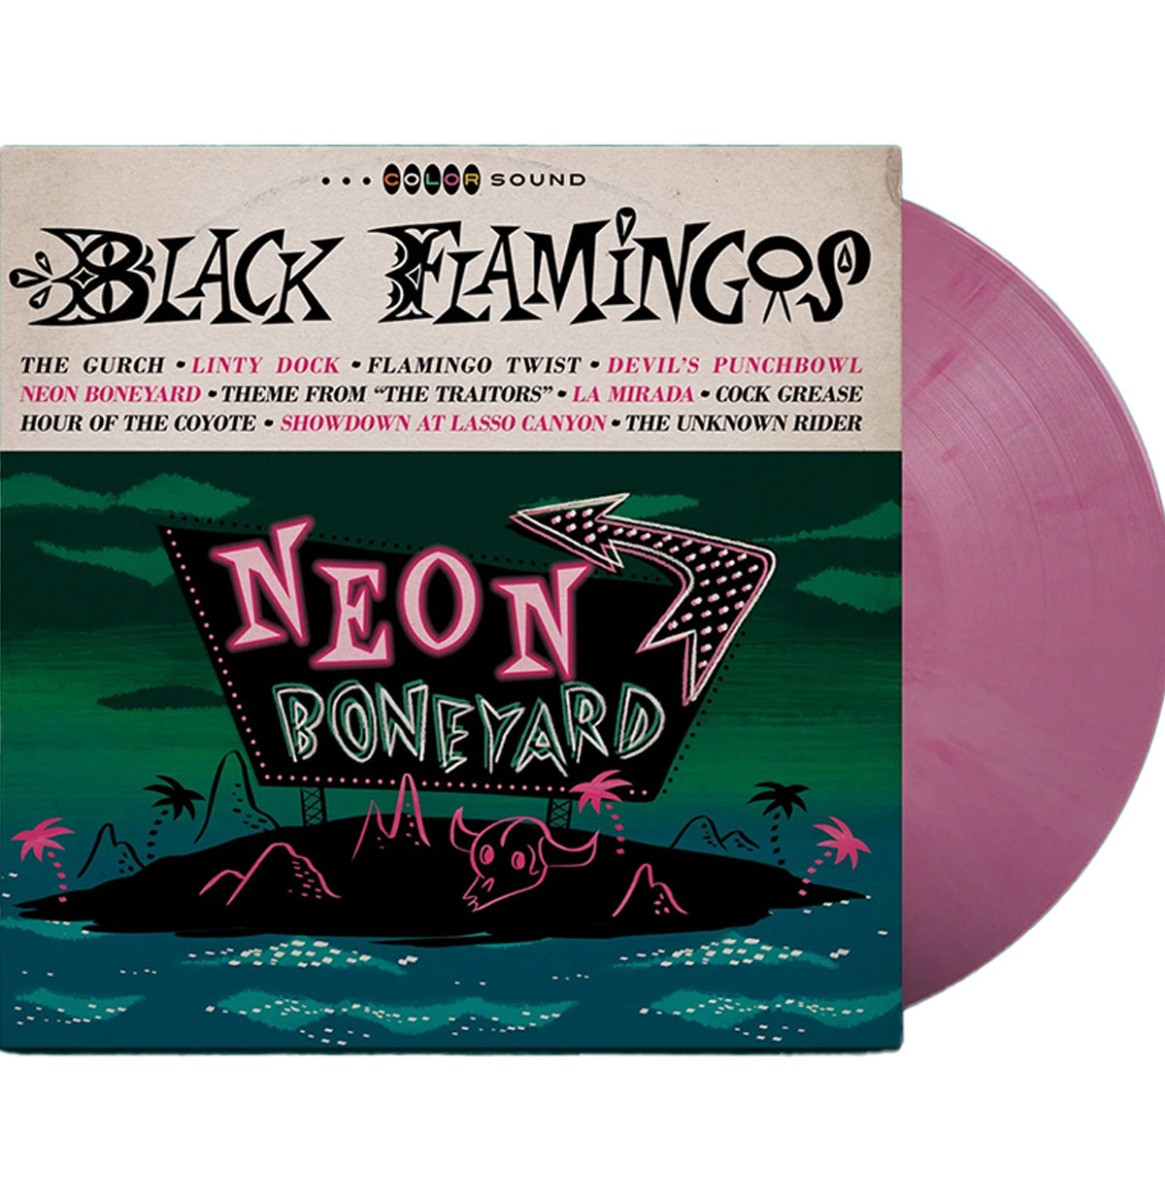 Black Flamingos - Neon Boneyard (Roze Vinyl) LP